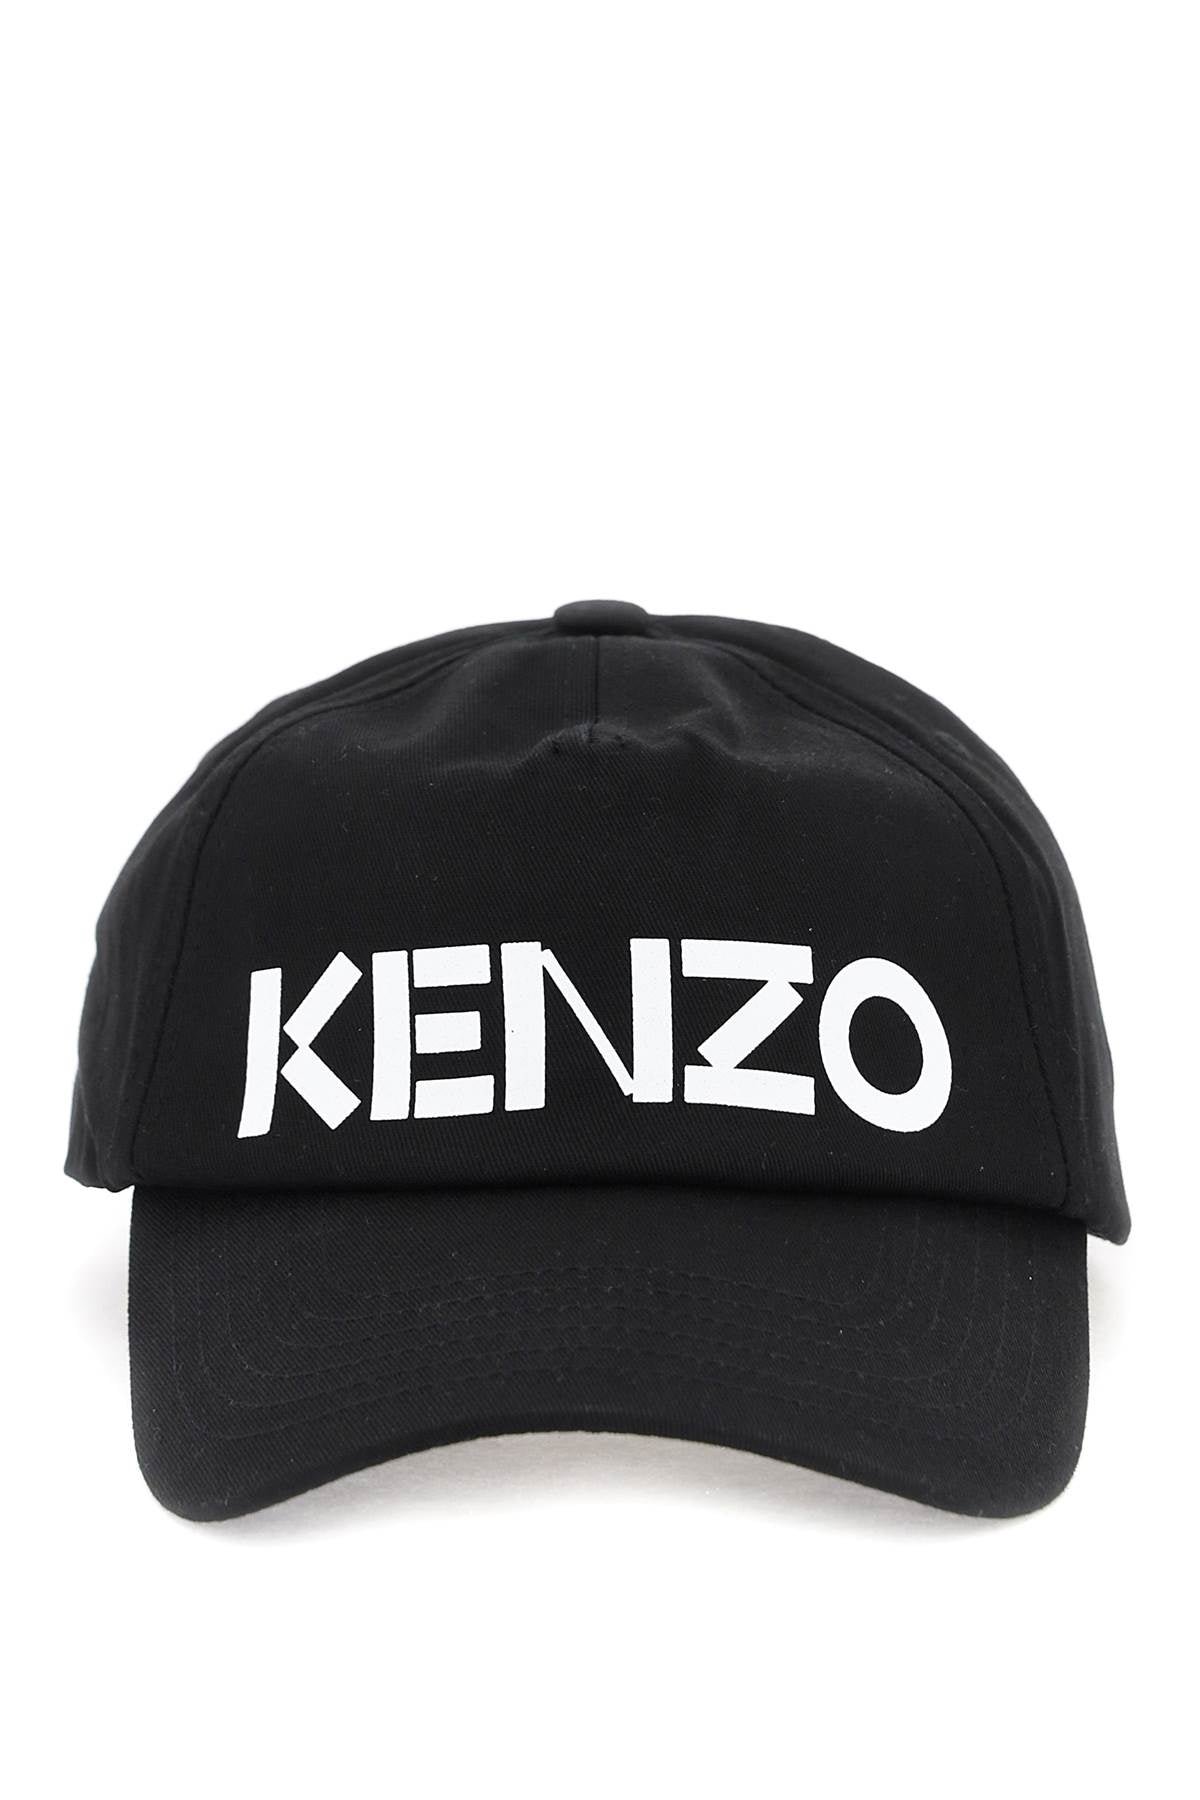 Kenzo kenzography baseball cap-0